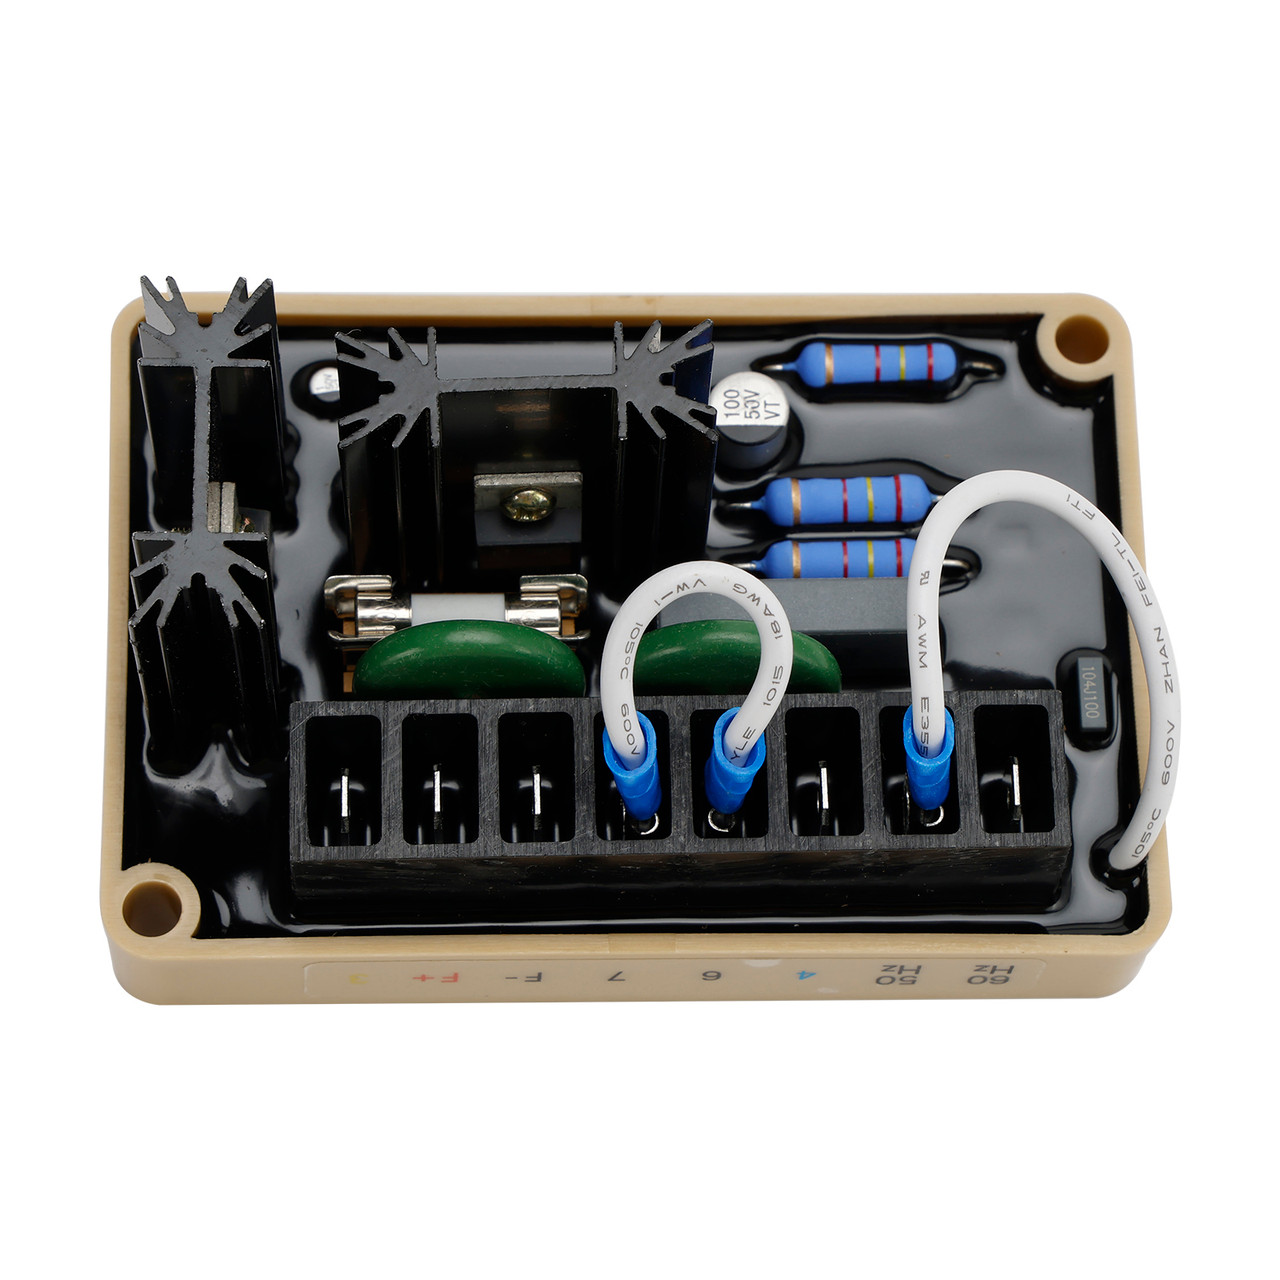 AVR SE350 Automatic Voltage Regulator Compatible With Marathon Generator